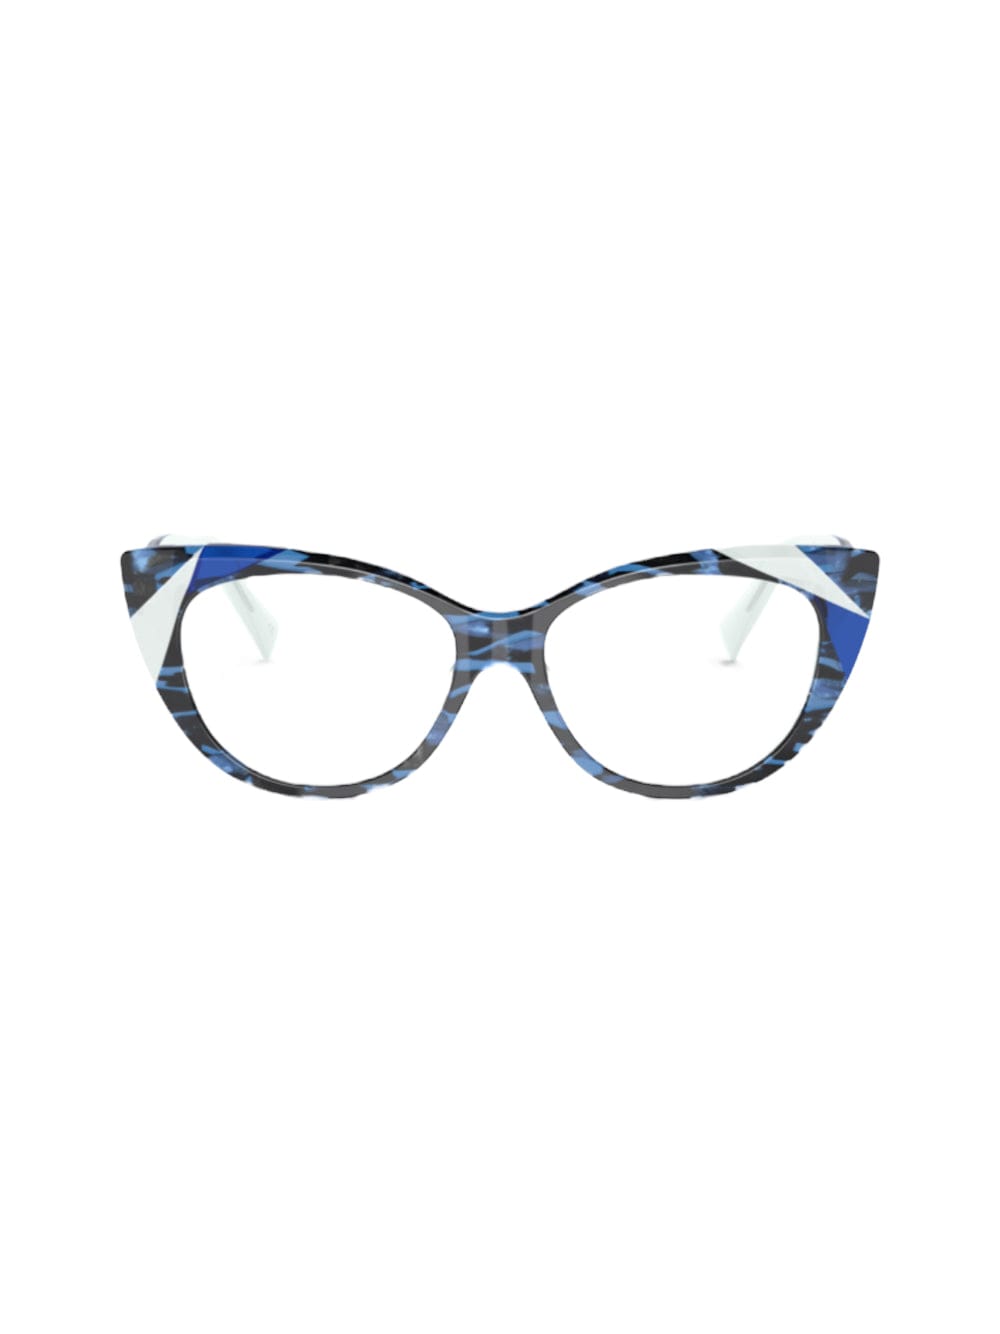 Alain Mikli Coralli - 3142 - Black/blue Glasses